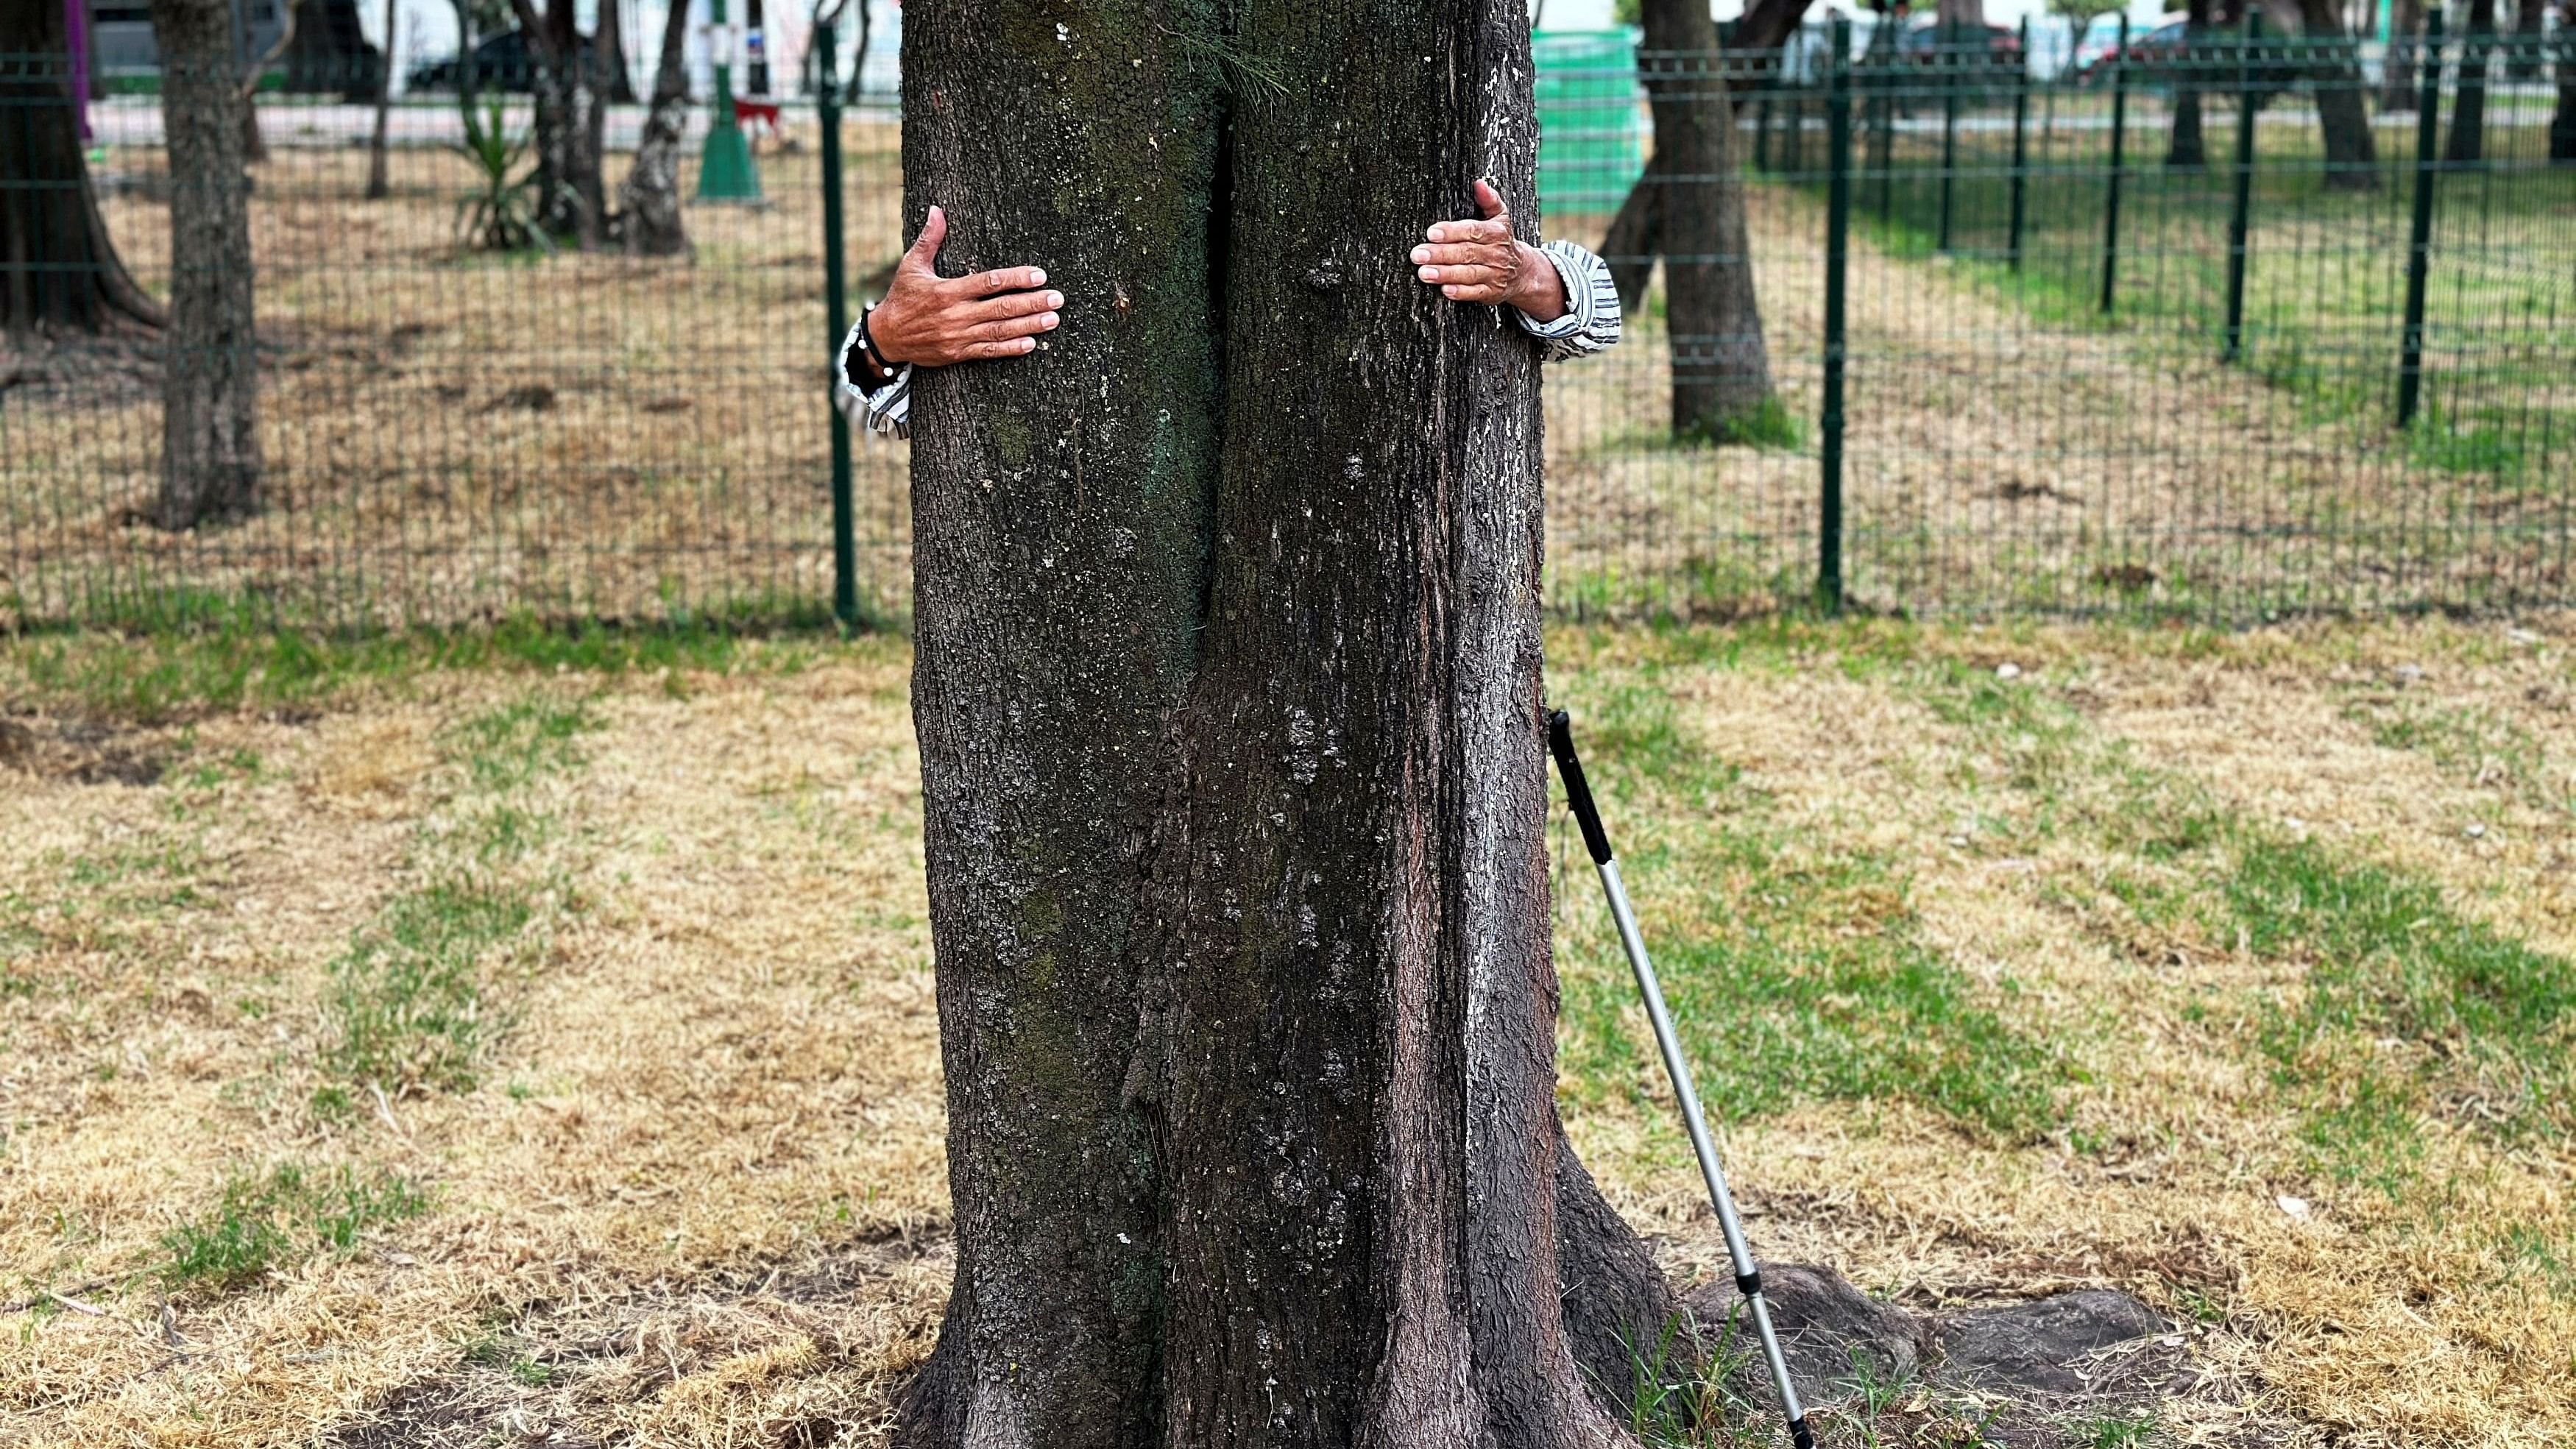 <div class="paragraphs"><p>File photo showing a man hugging a tree.</p></div>